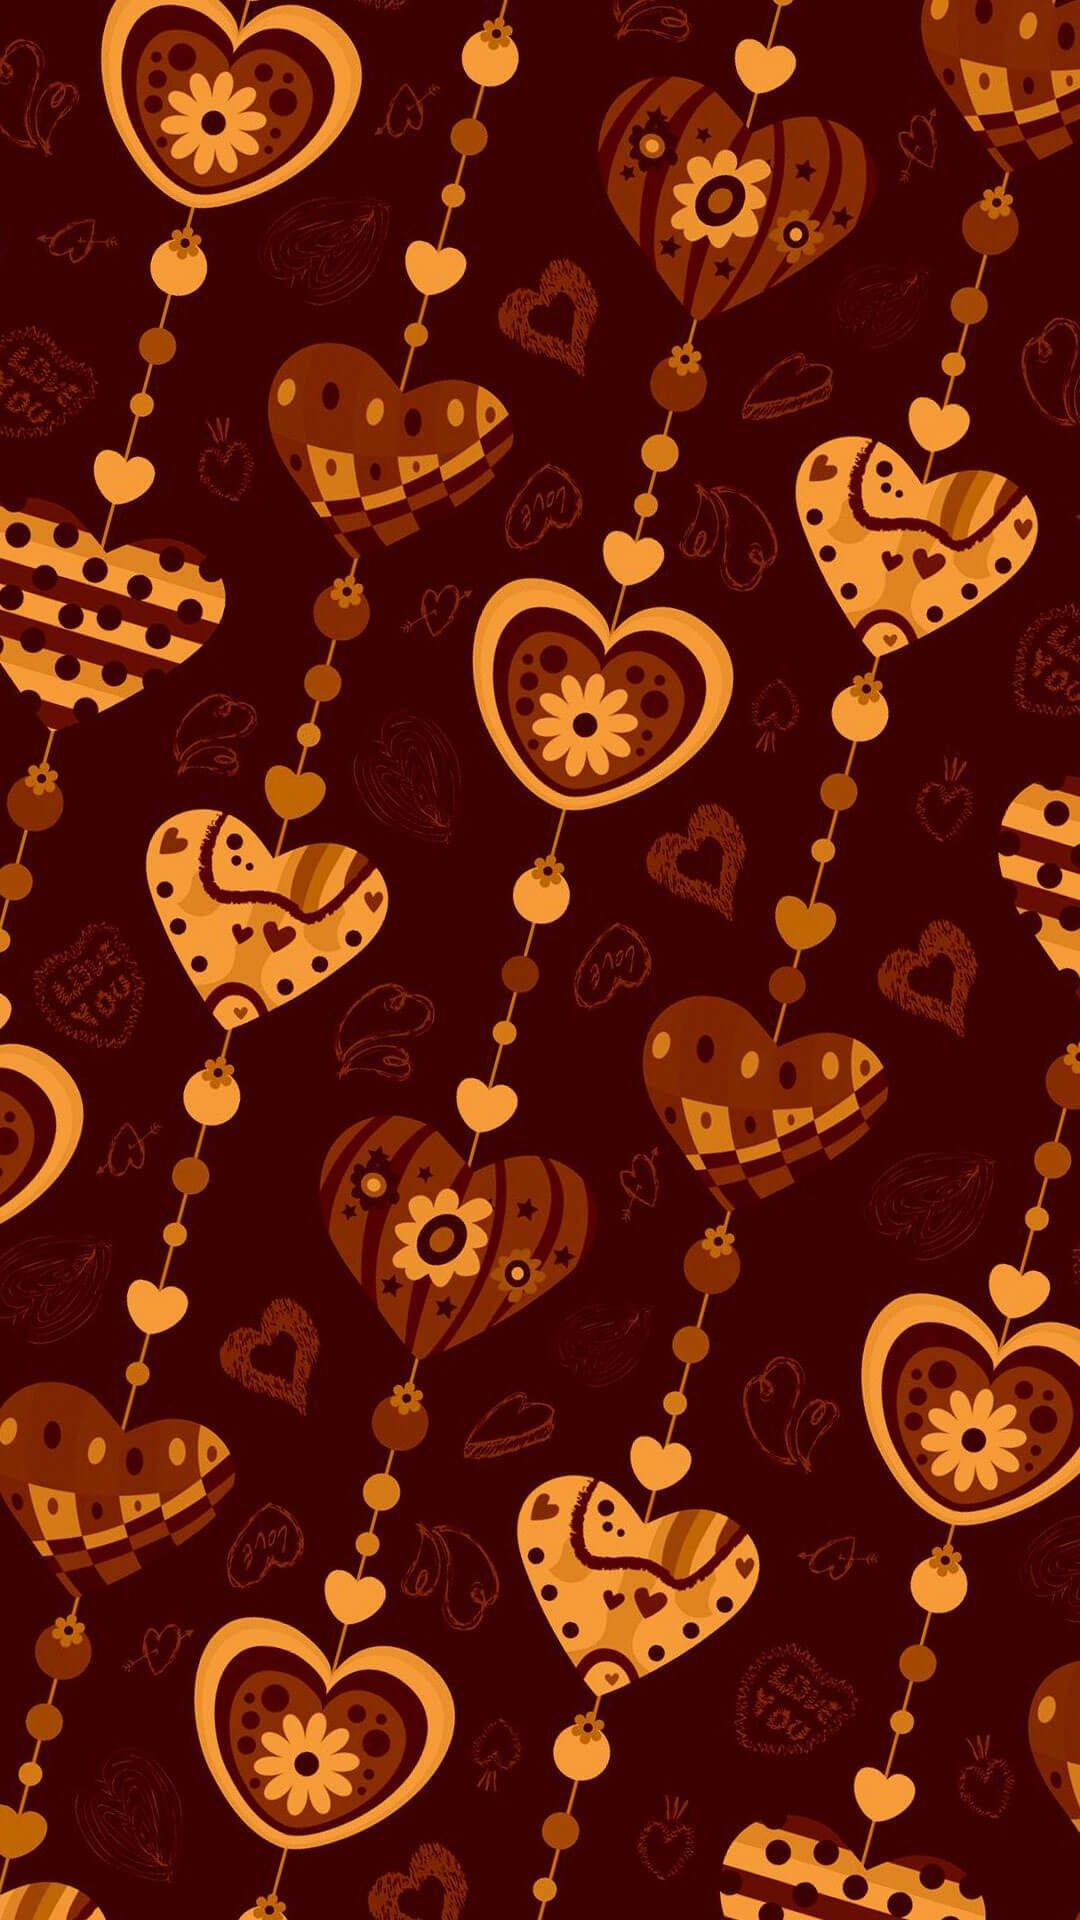 Brown heart aesthetic wallpapers download